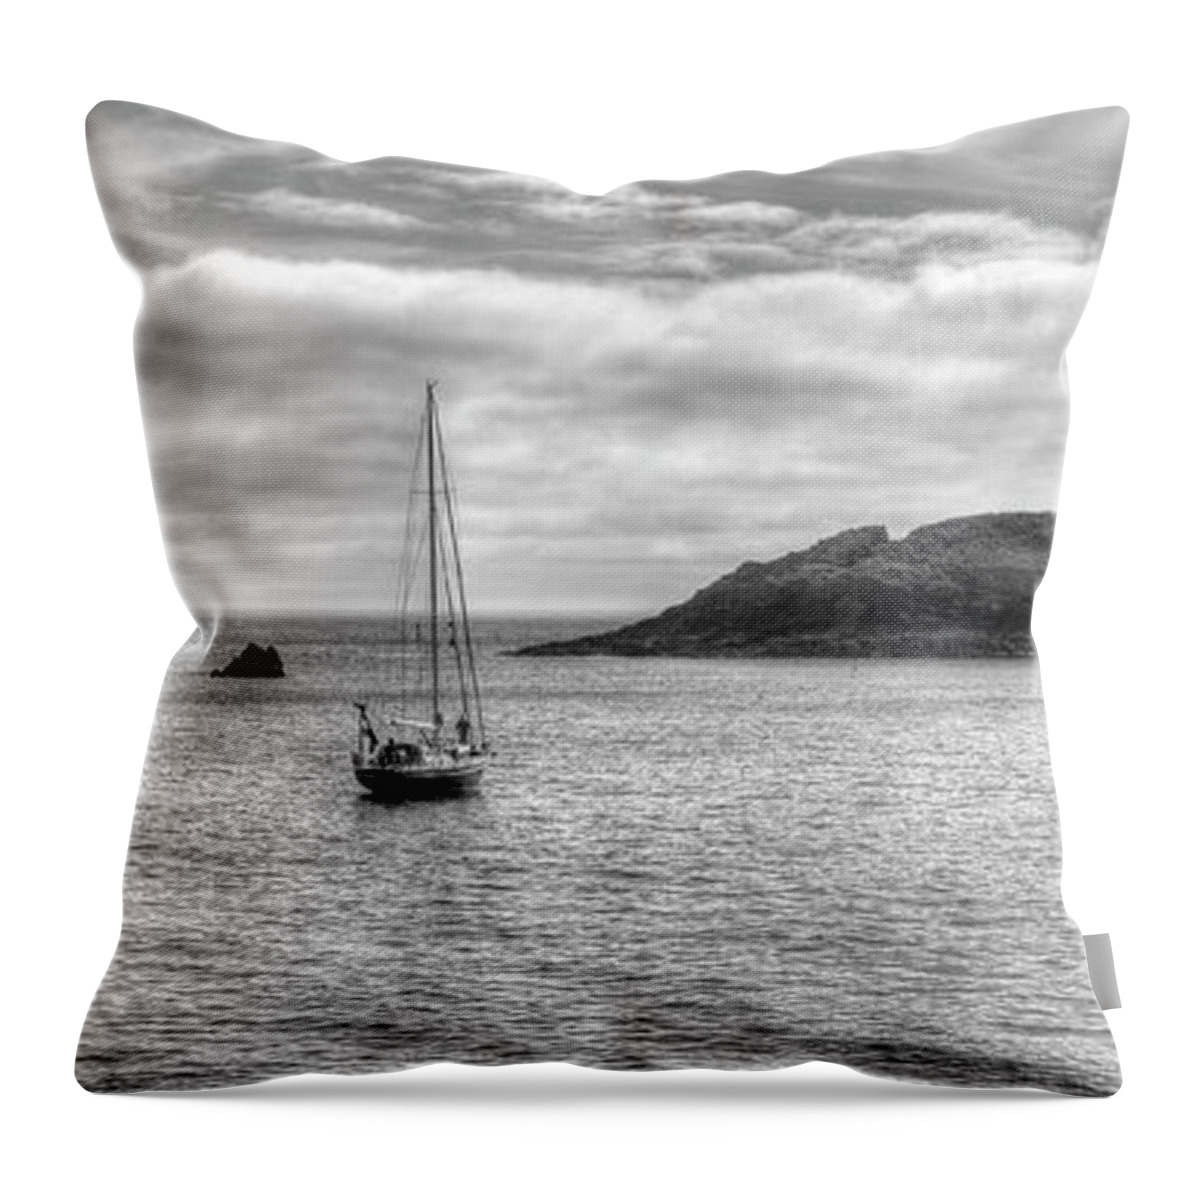 Mullion Throw Pillow featuring the photograph Mullion Island by Hazy Apple